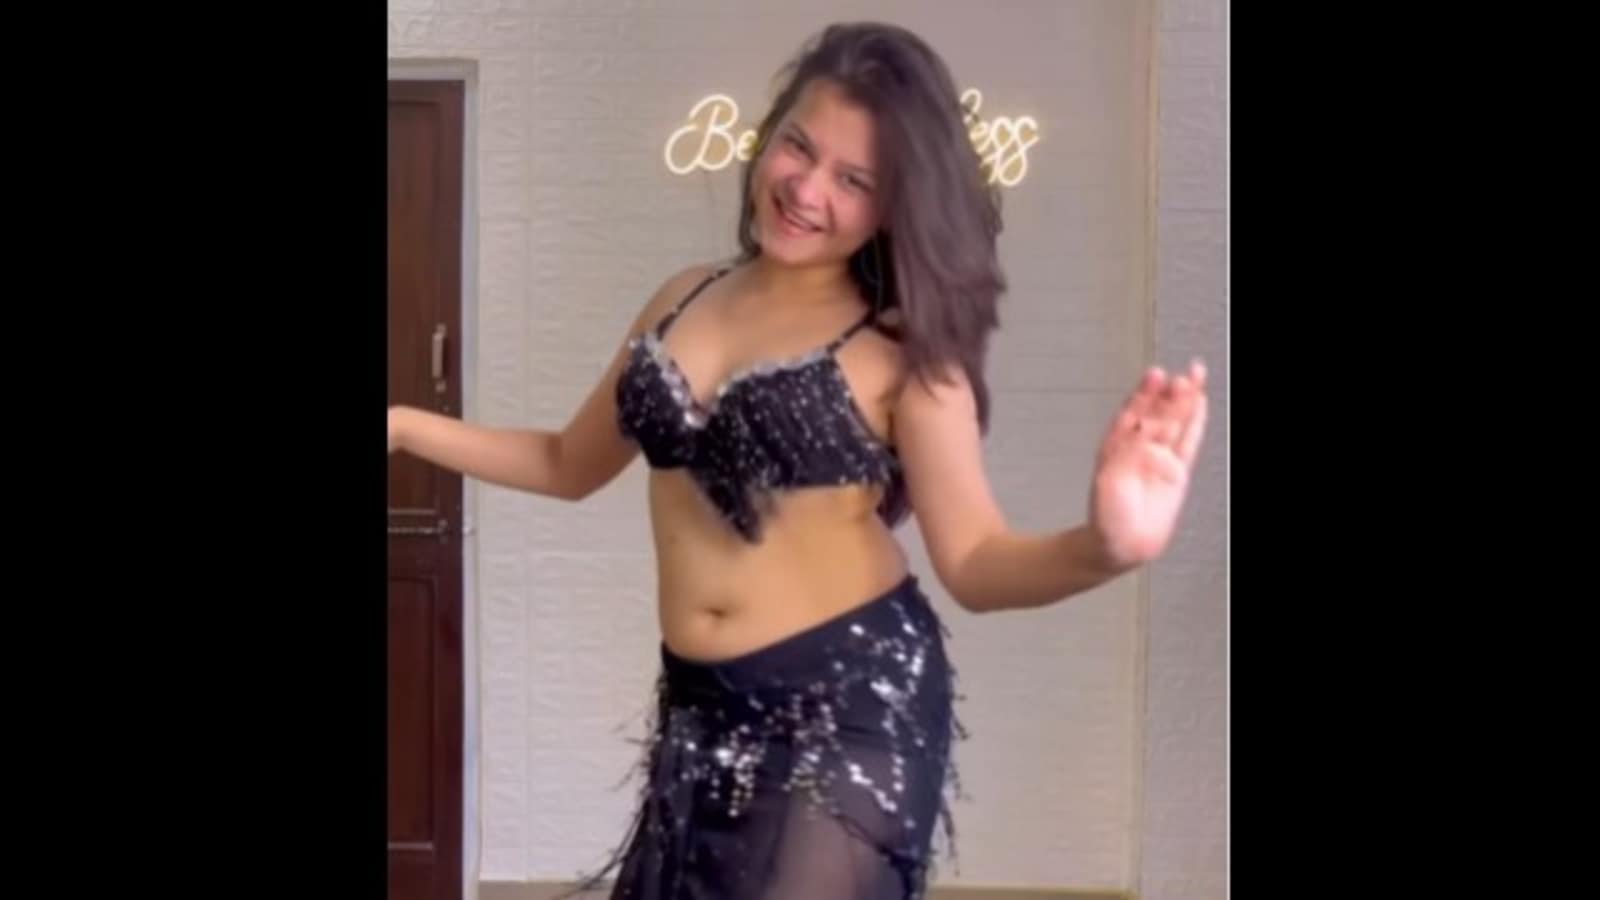 bryan brickner share dancing with no bra photos